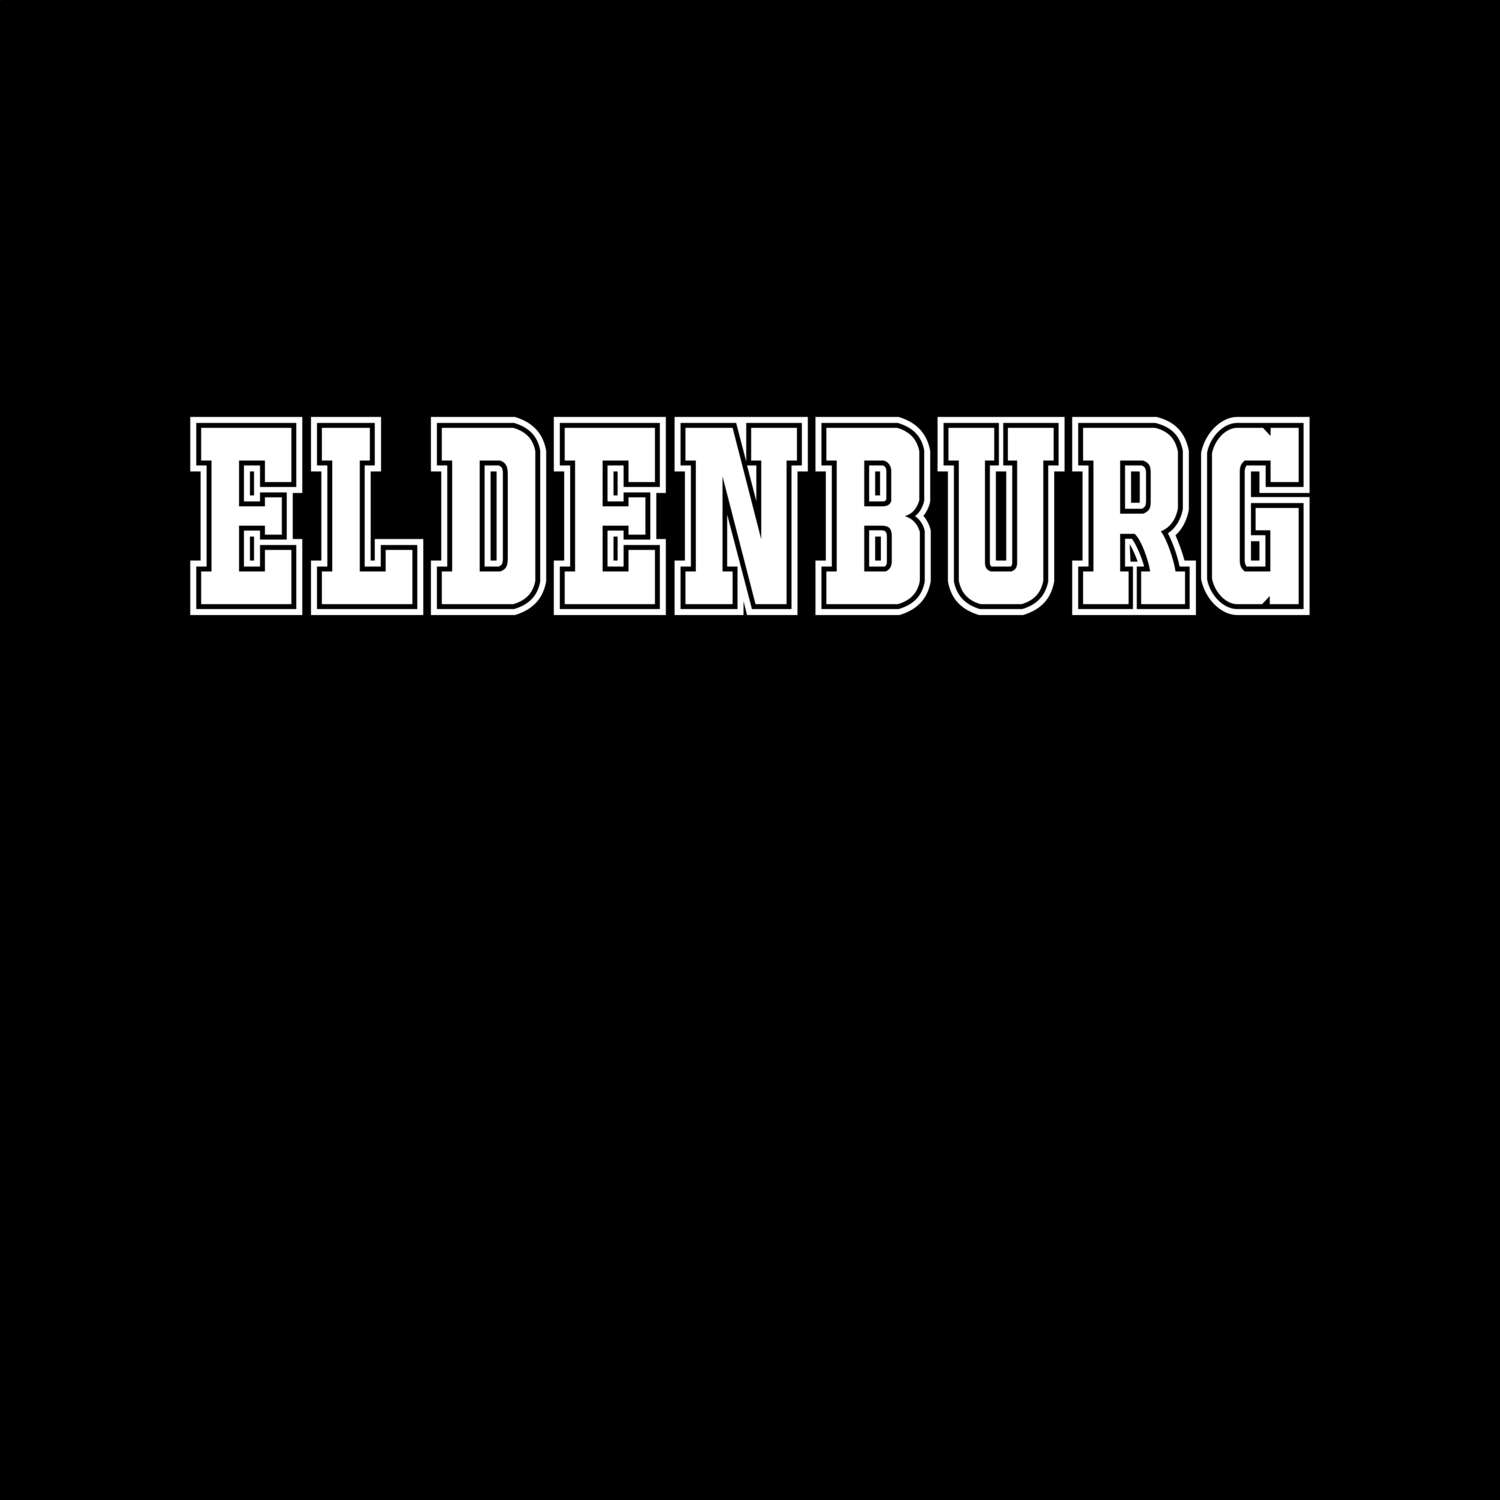 Eldenburg T-Shirt »Classic«